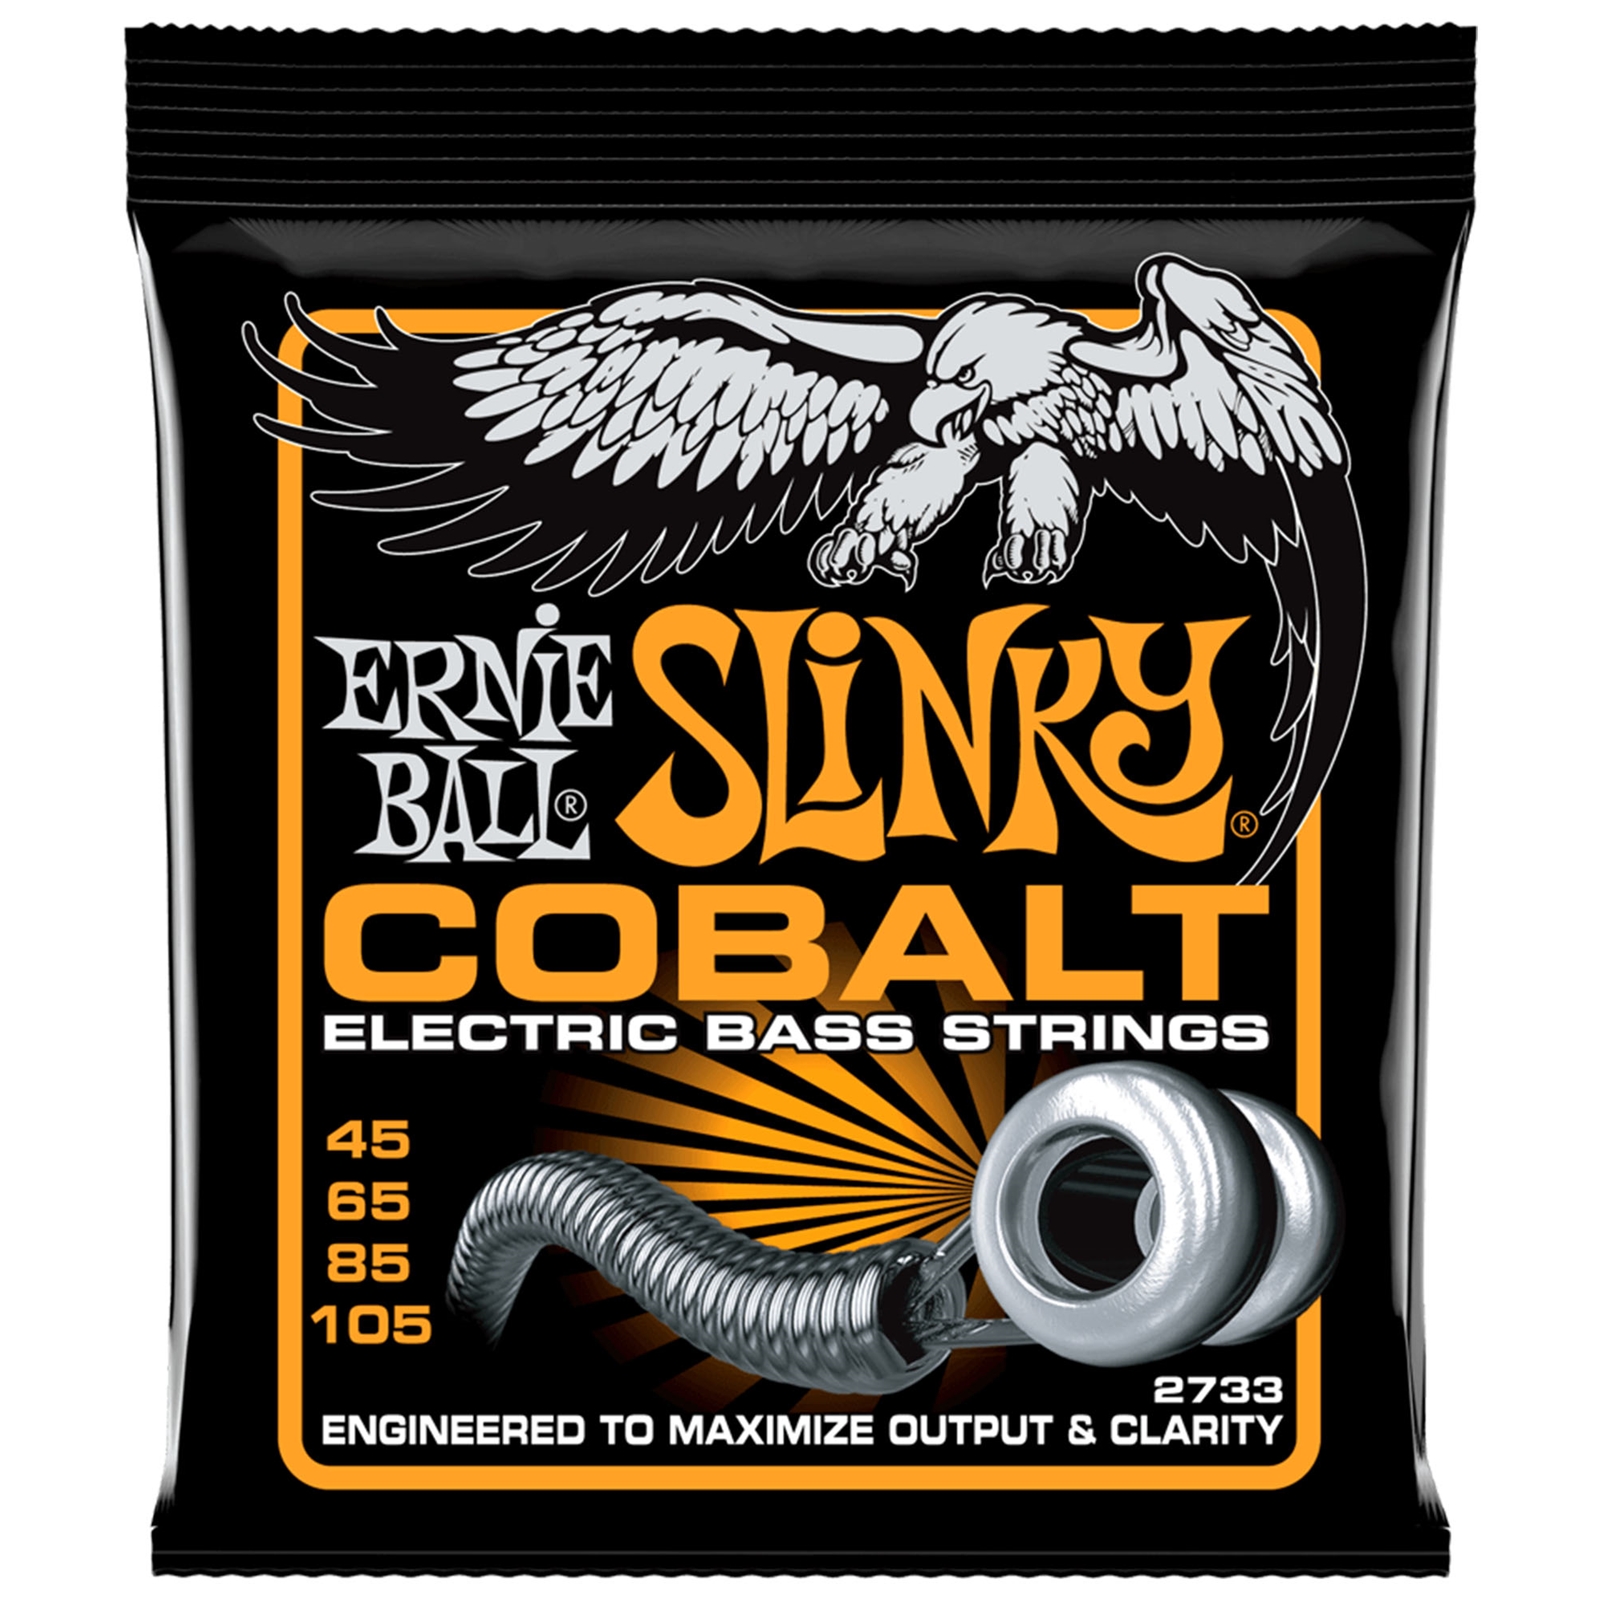 Ernie Ball Hybrid Slinky Cobalt Electric Bass Strings 45-105 Gauge